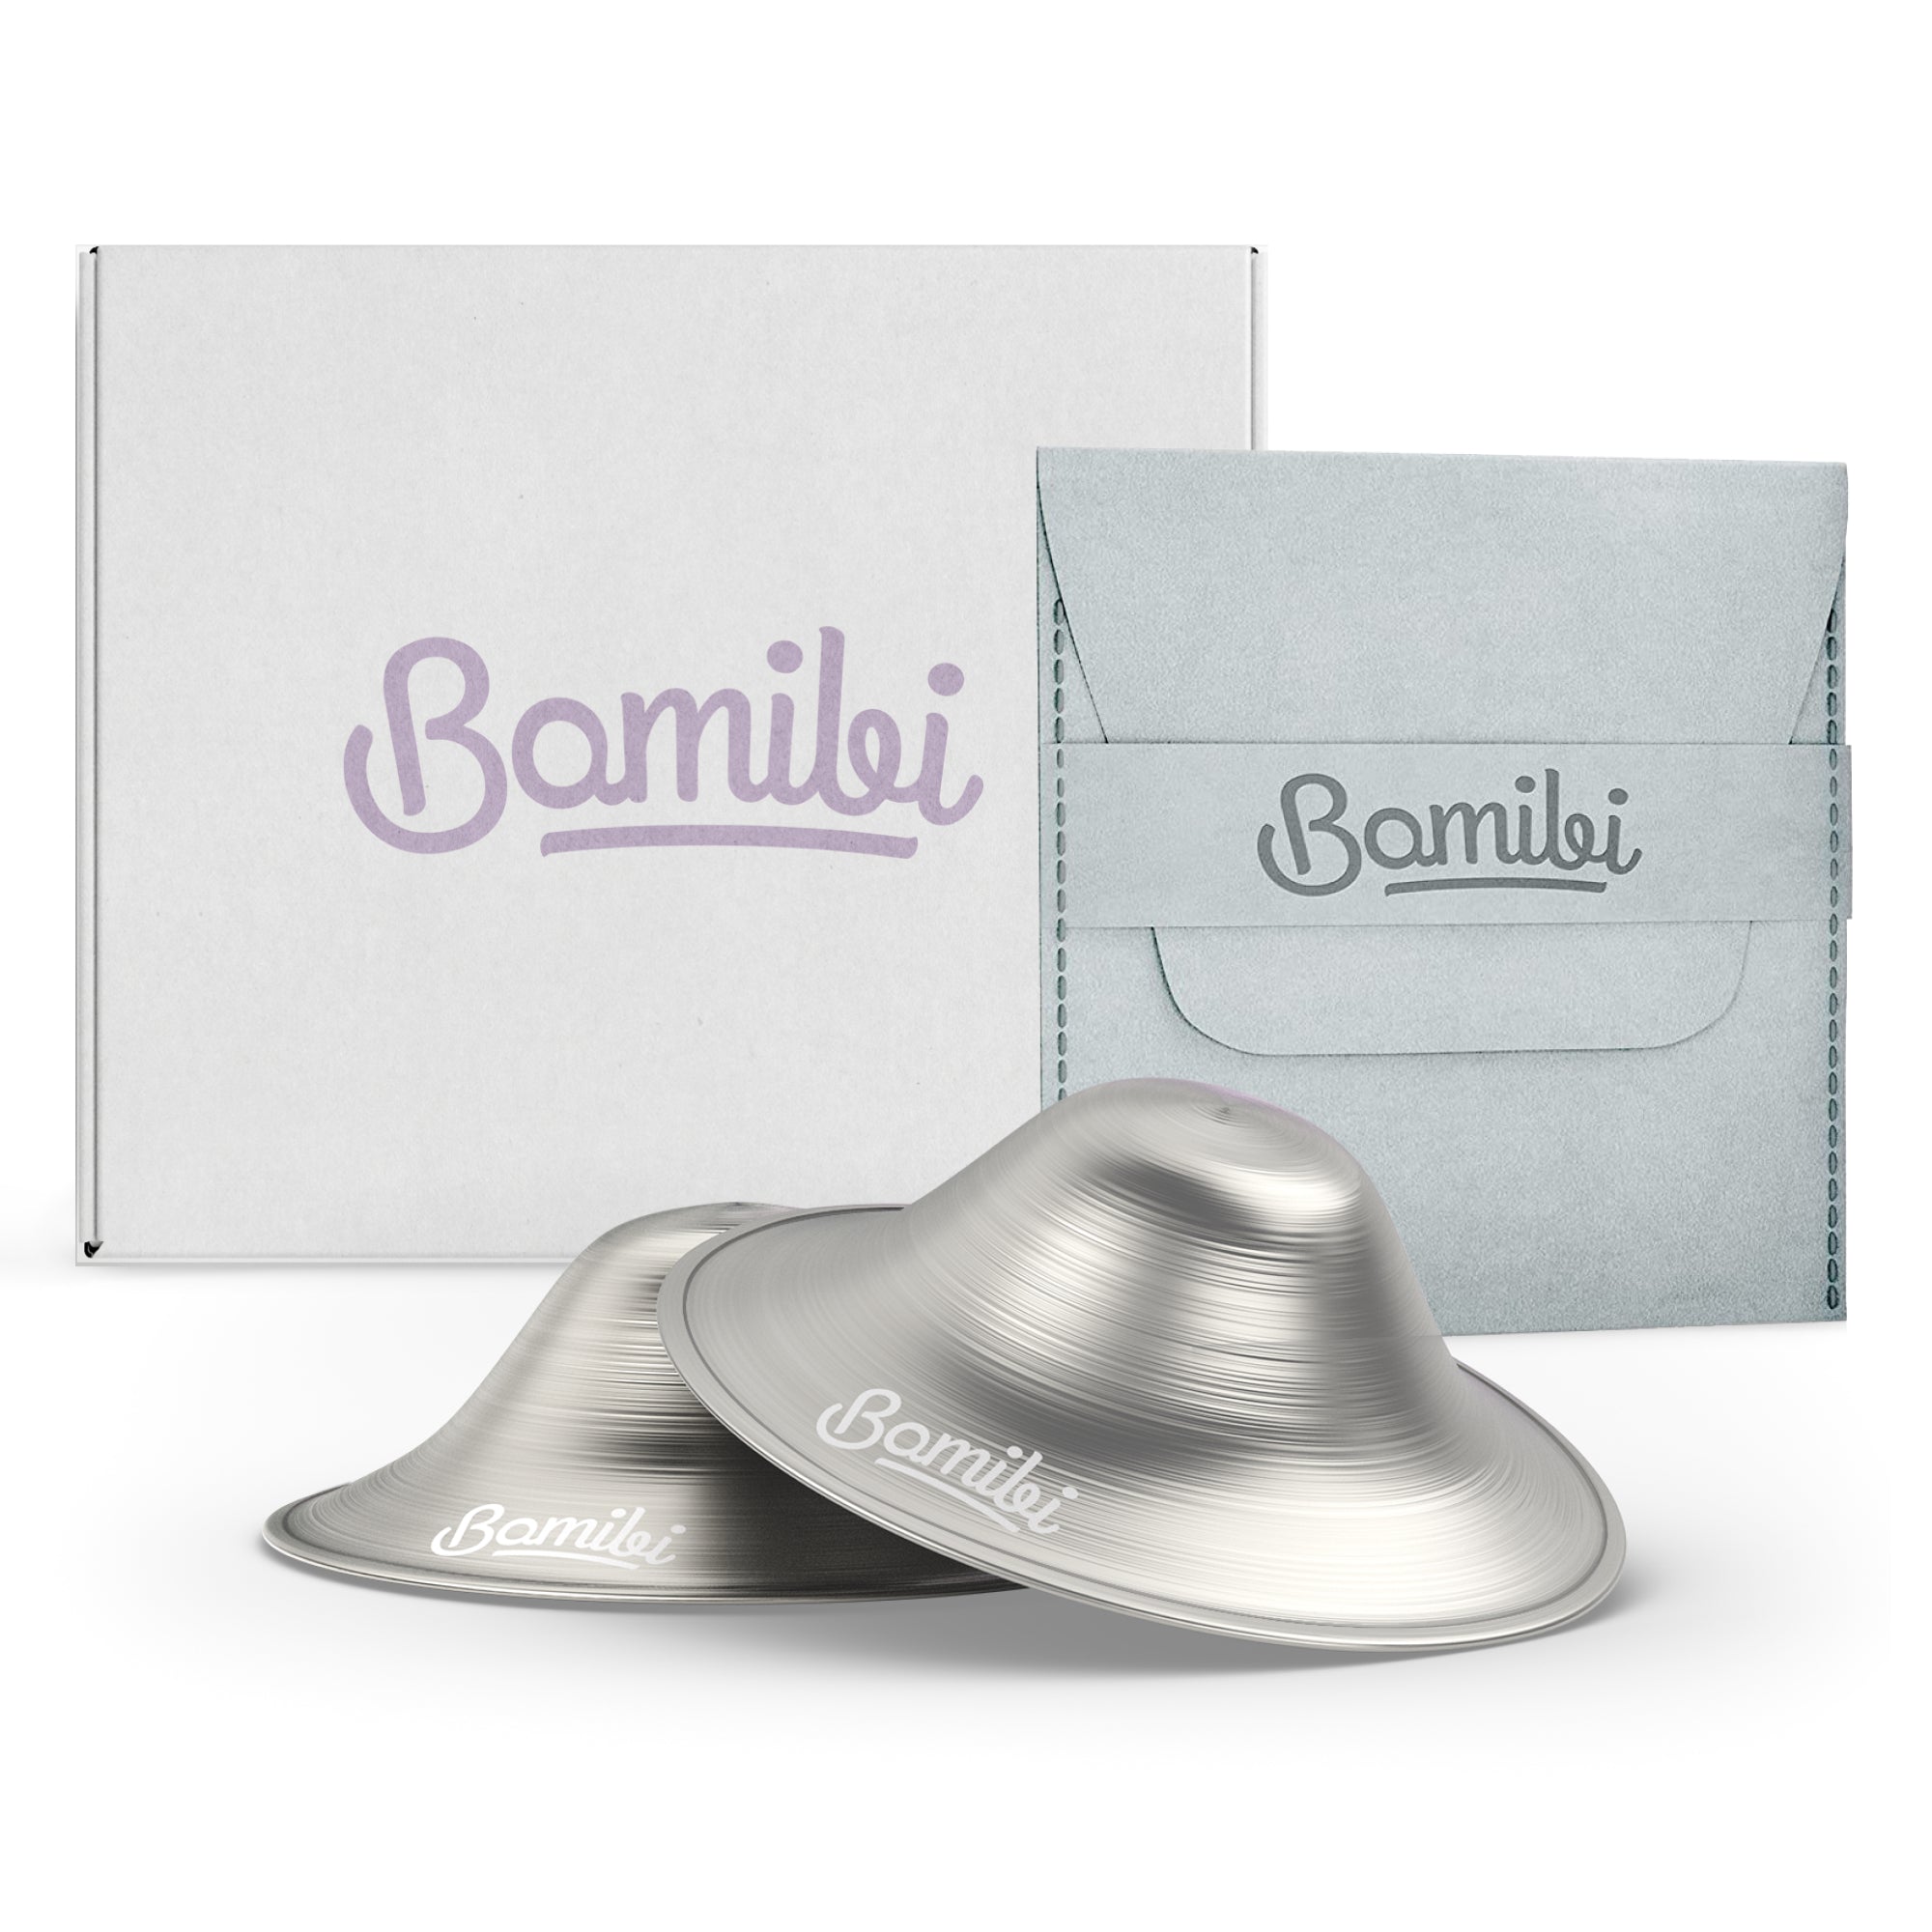 Bamibi Silver Nursing Cups - 999 Silver